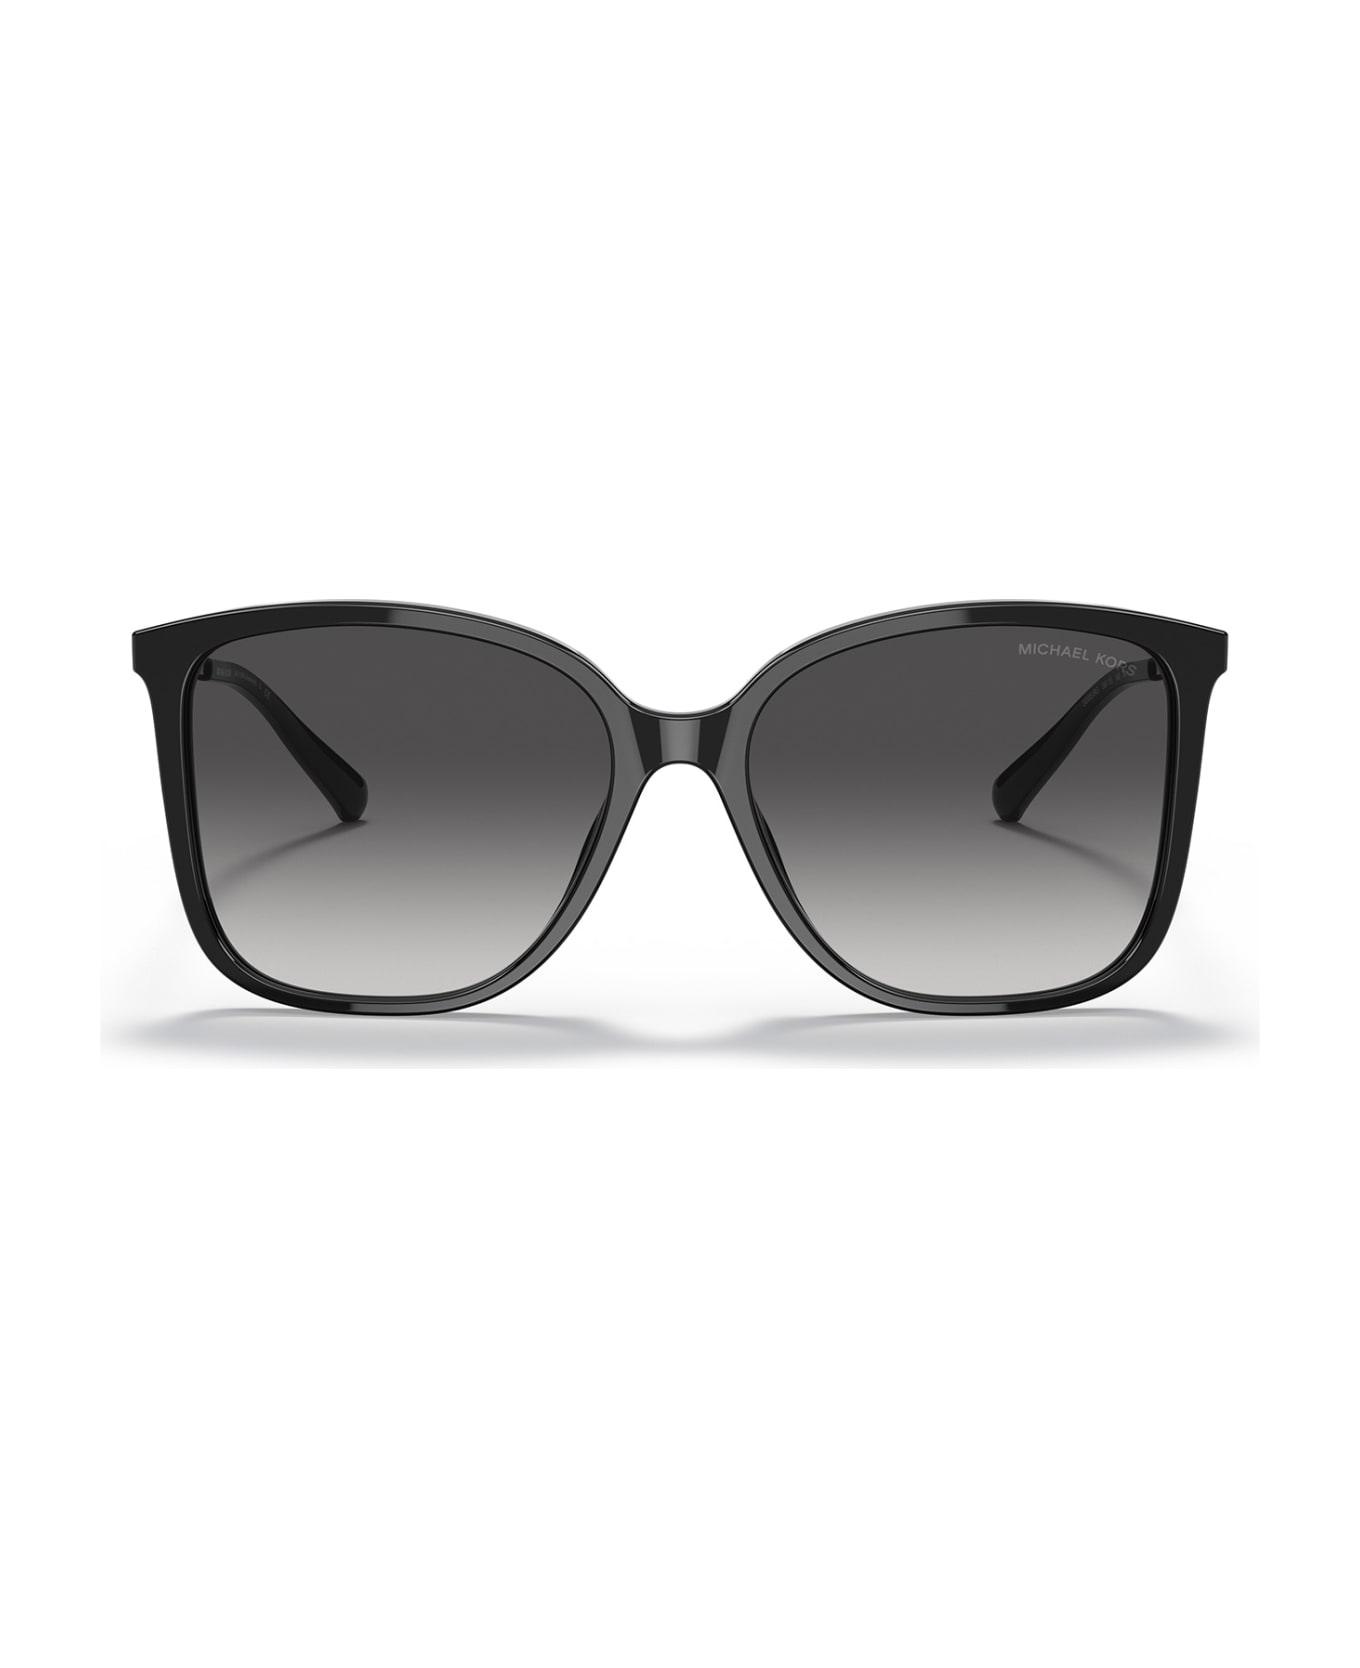 Michael Kors Mk2169 Black Sunglasses - Black